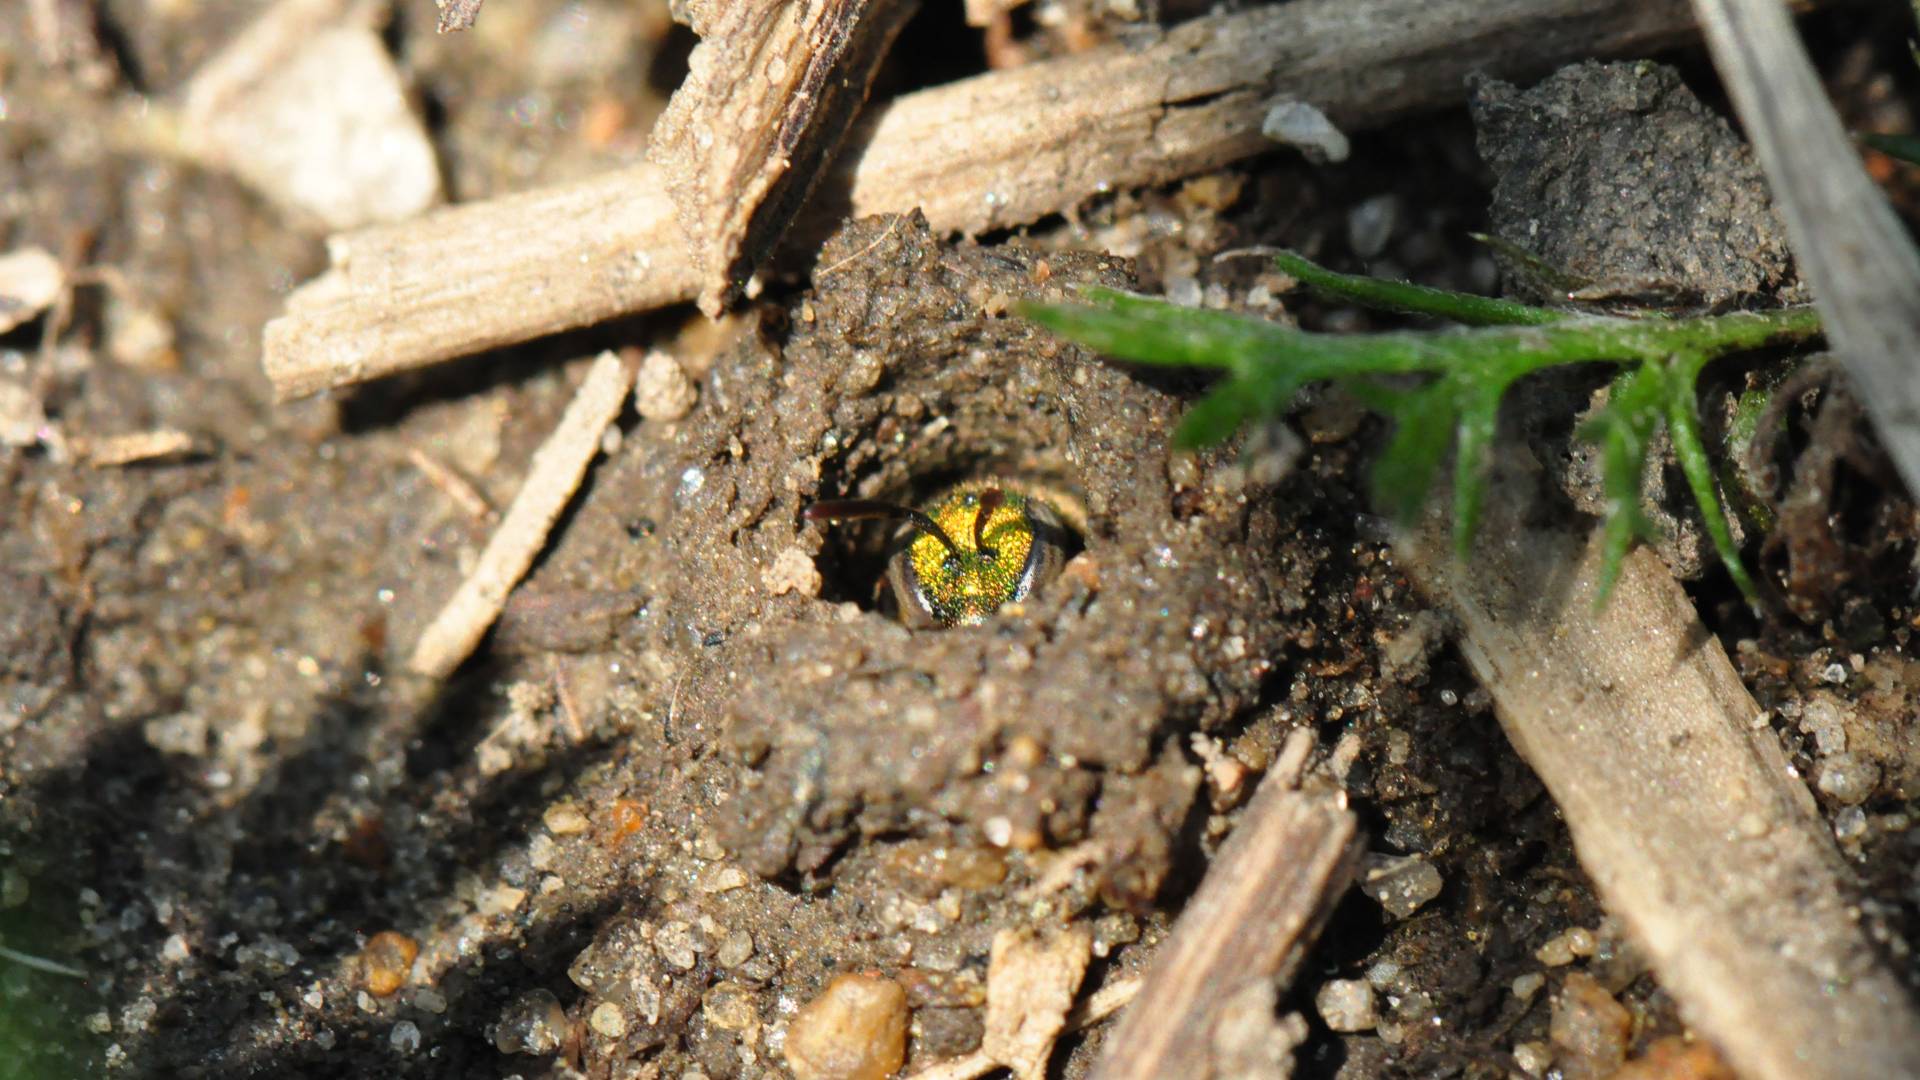 Sweat bee nest on the ground